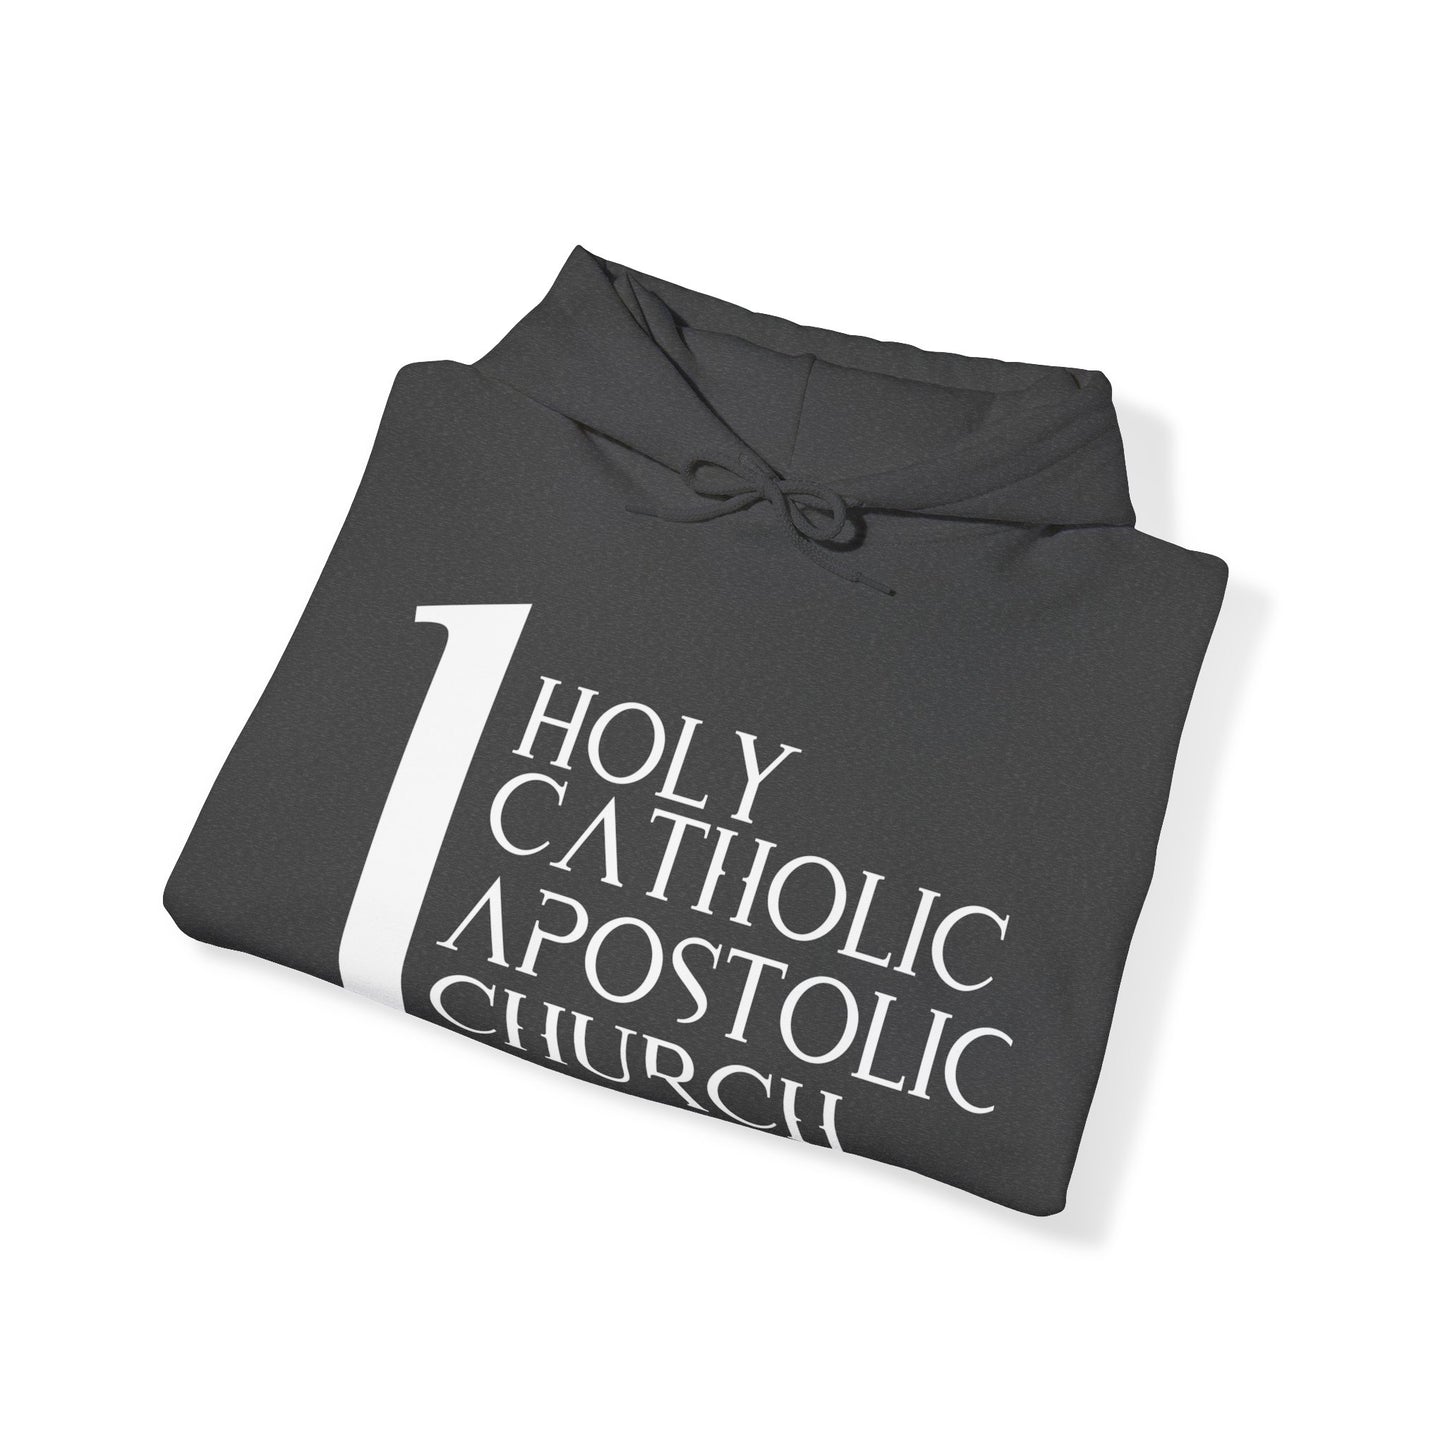 1 Holy Catholic Apostolic Church Hoodie